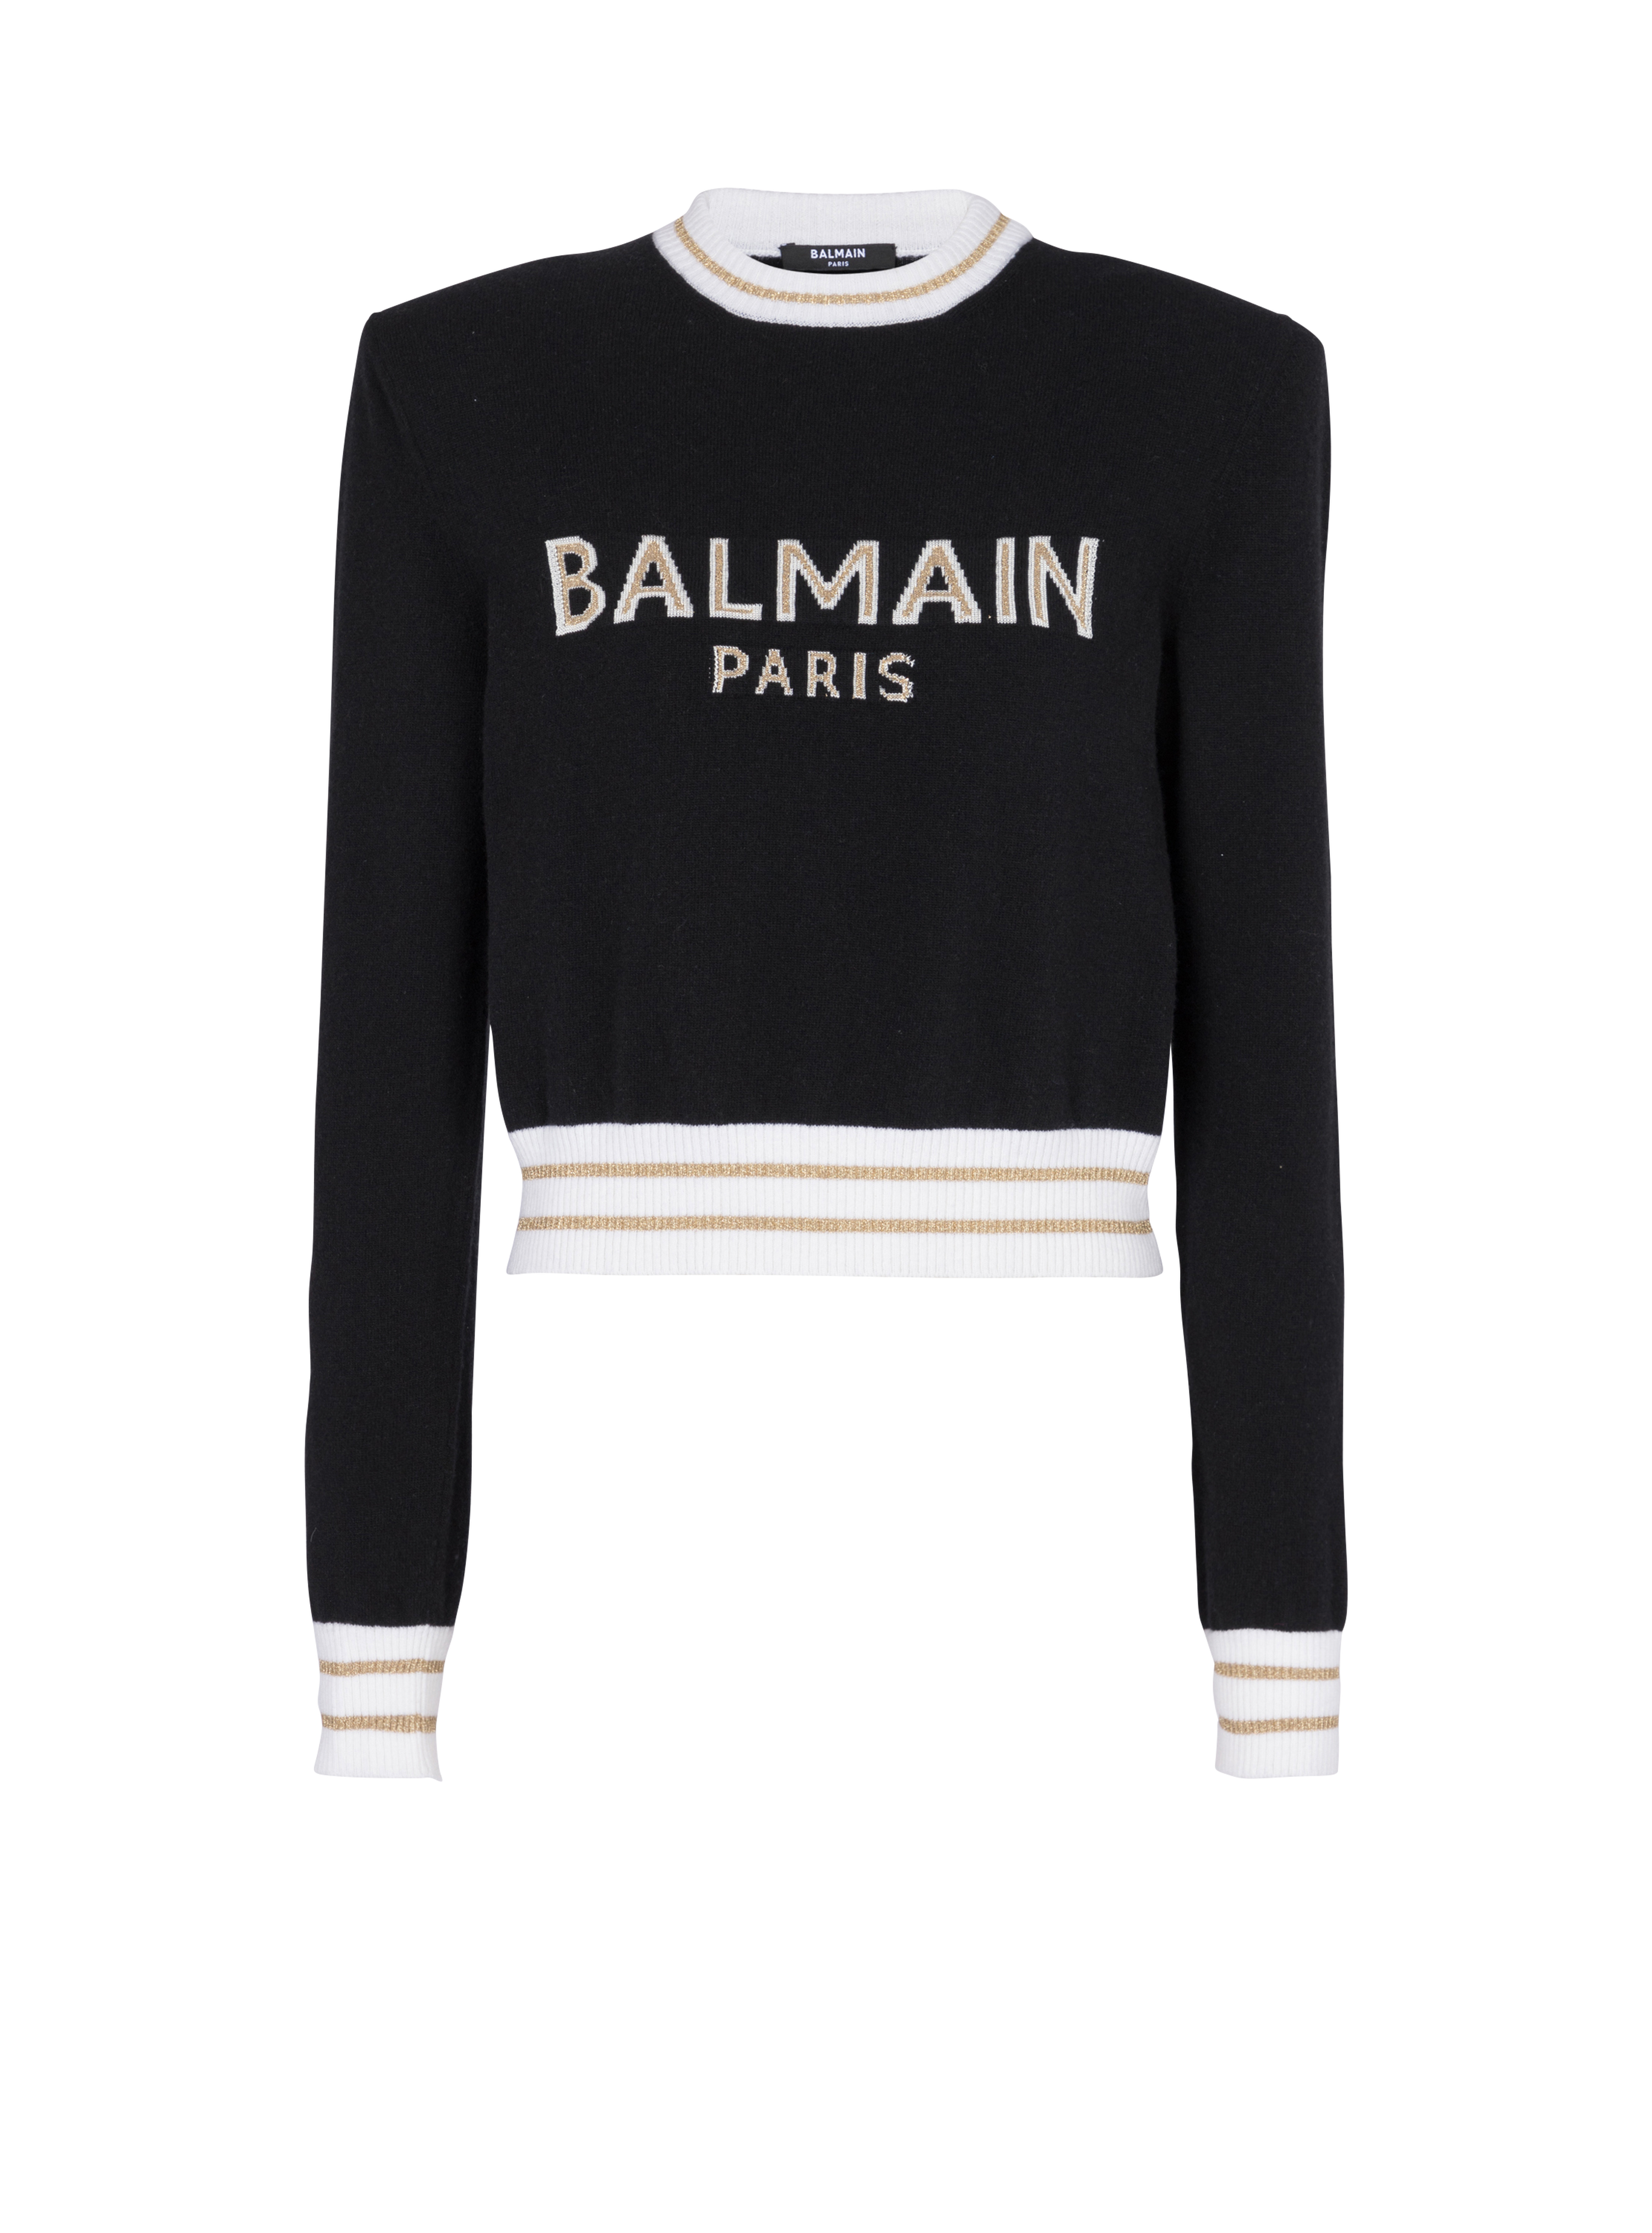 Balmain巴尔曼标志短款羊毛运动衫, black